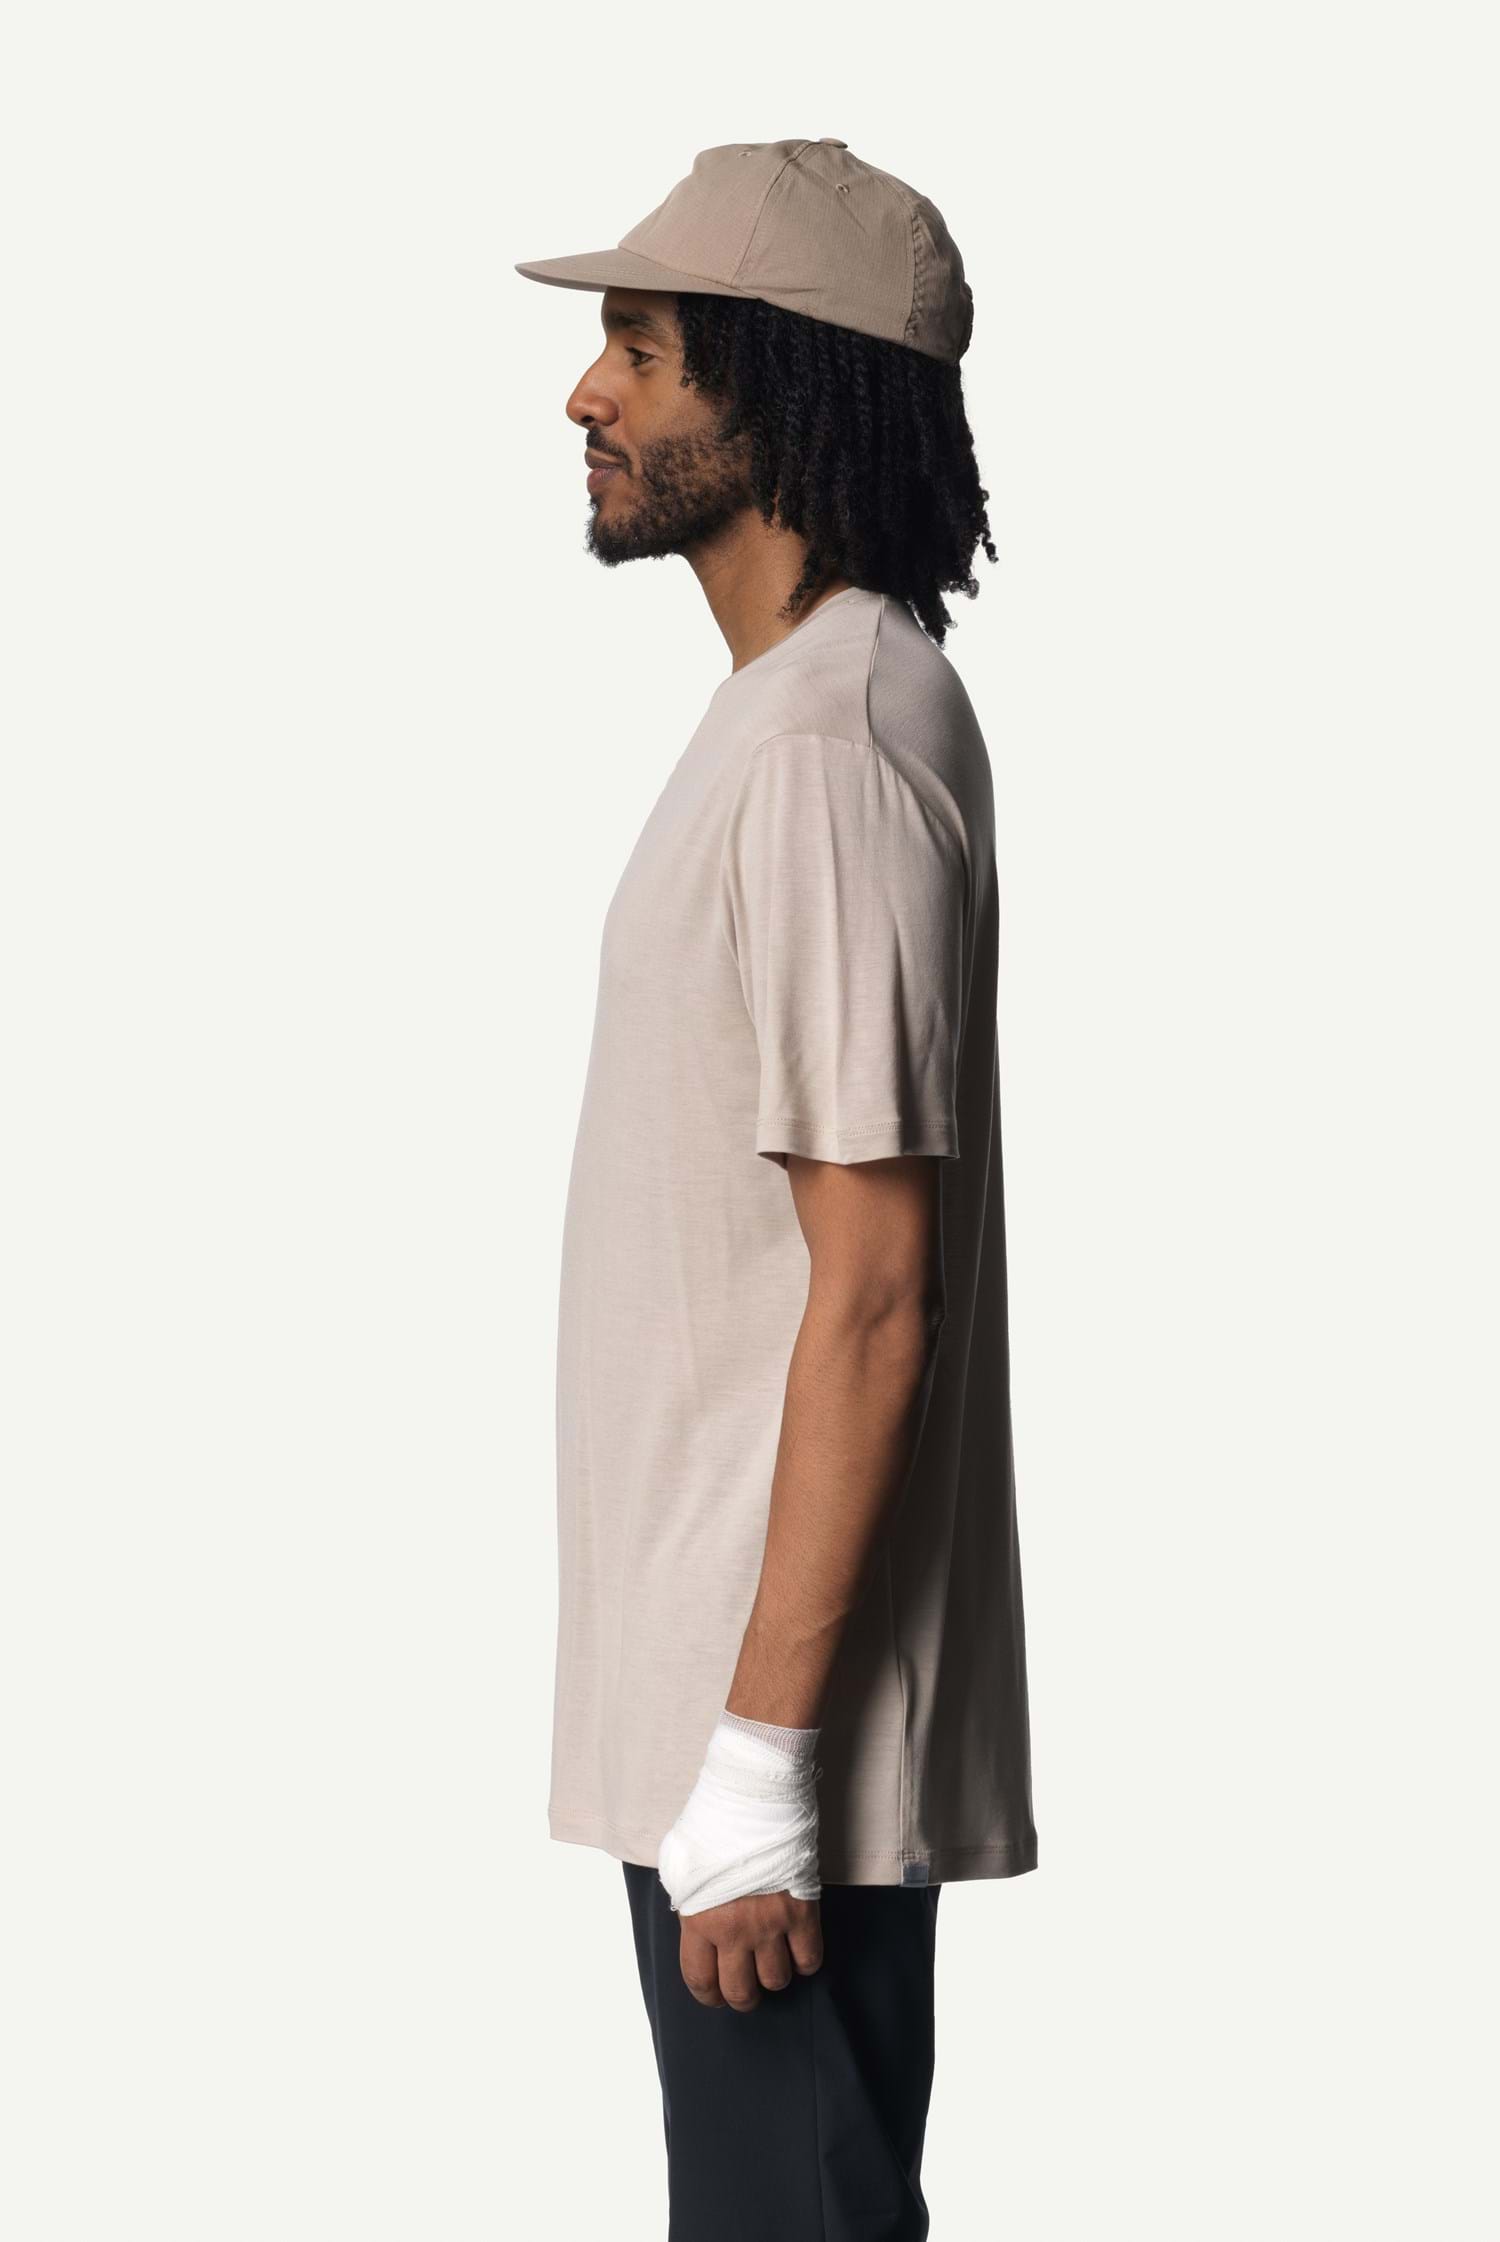 Simplmasygenix Men's Long Sleeve Tops Clearance Summer Shirts Men's Loose  Round Neck 3d Printing Long-sleeved T-shirt Top 